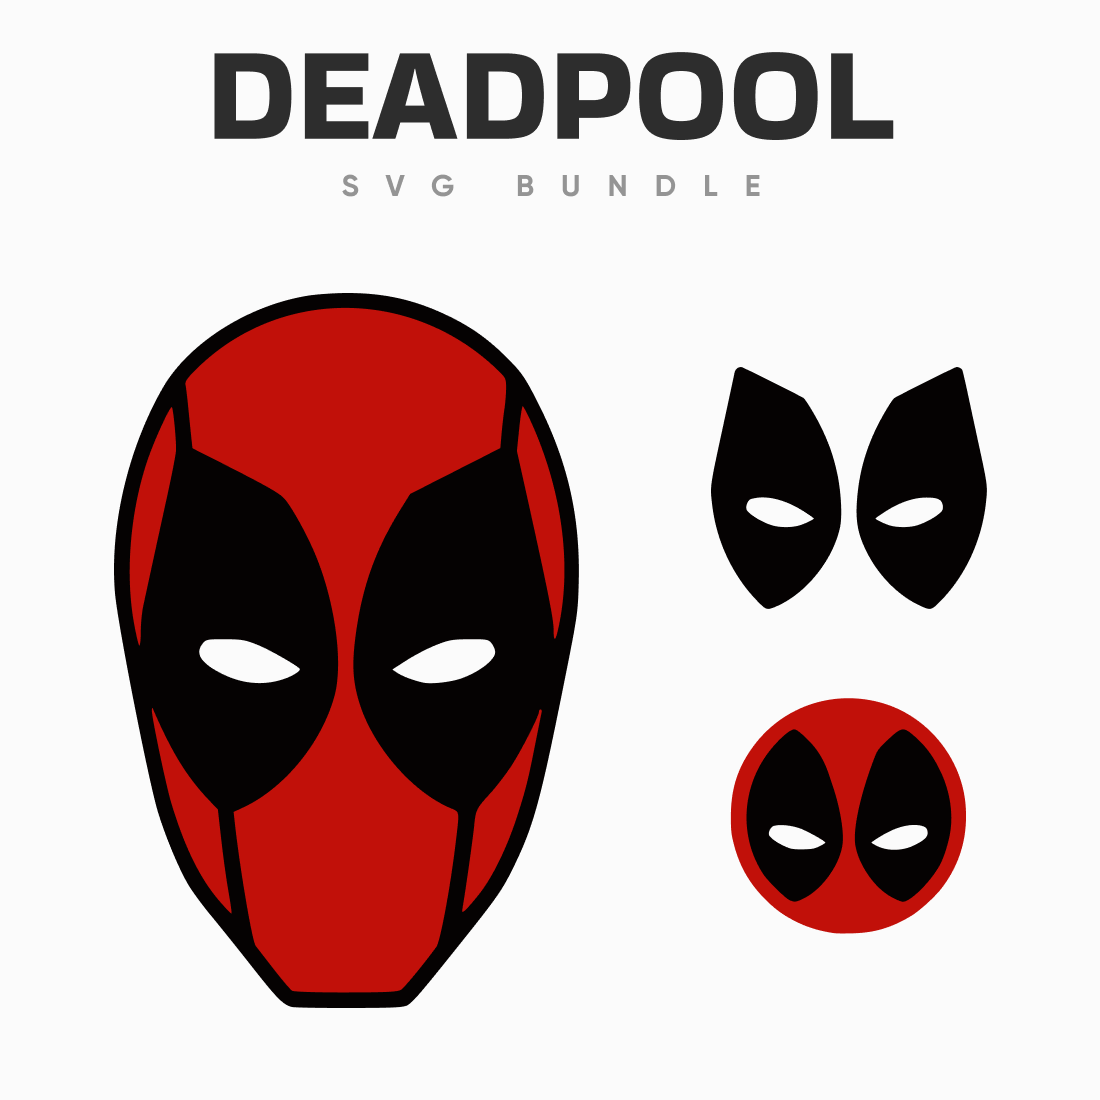 Deadpool SVG bundle.